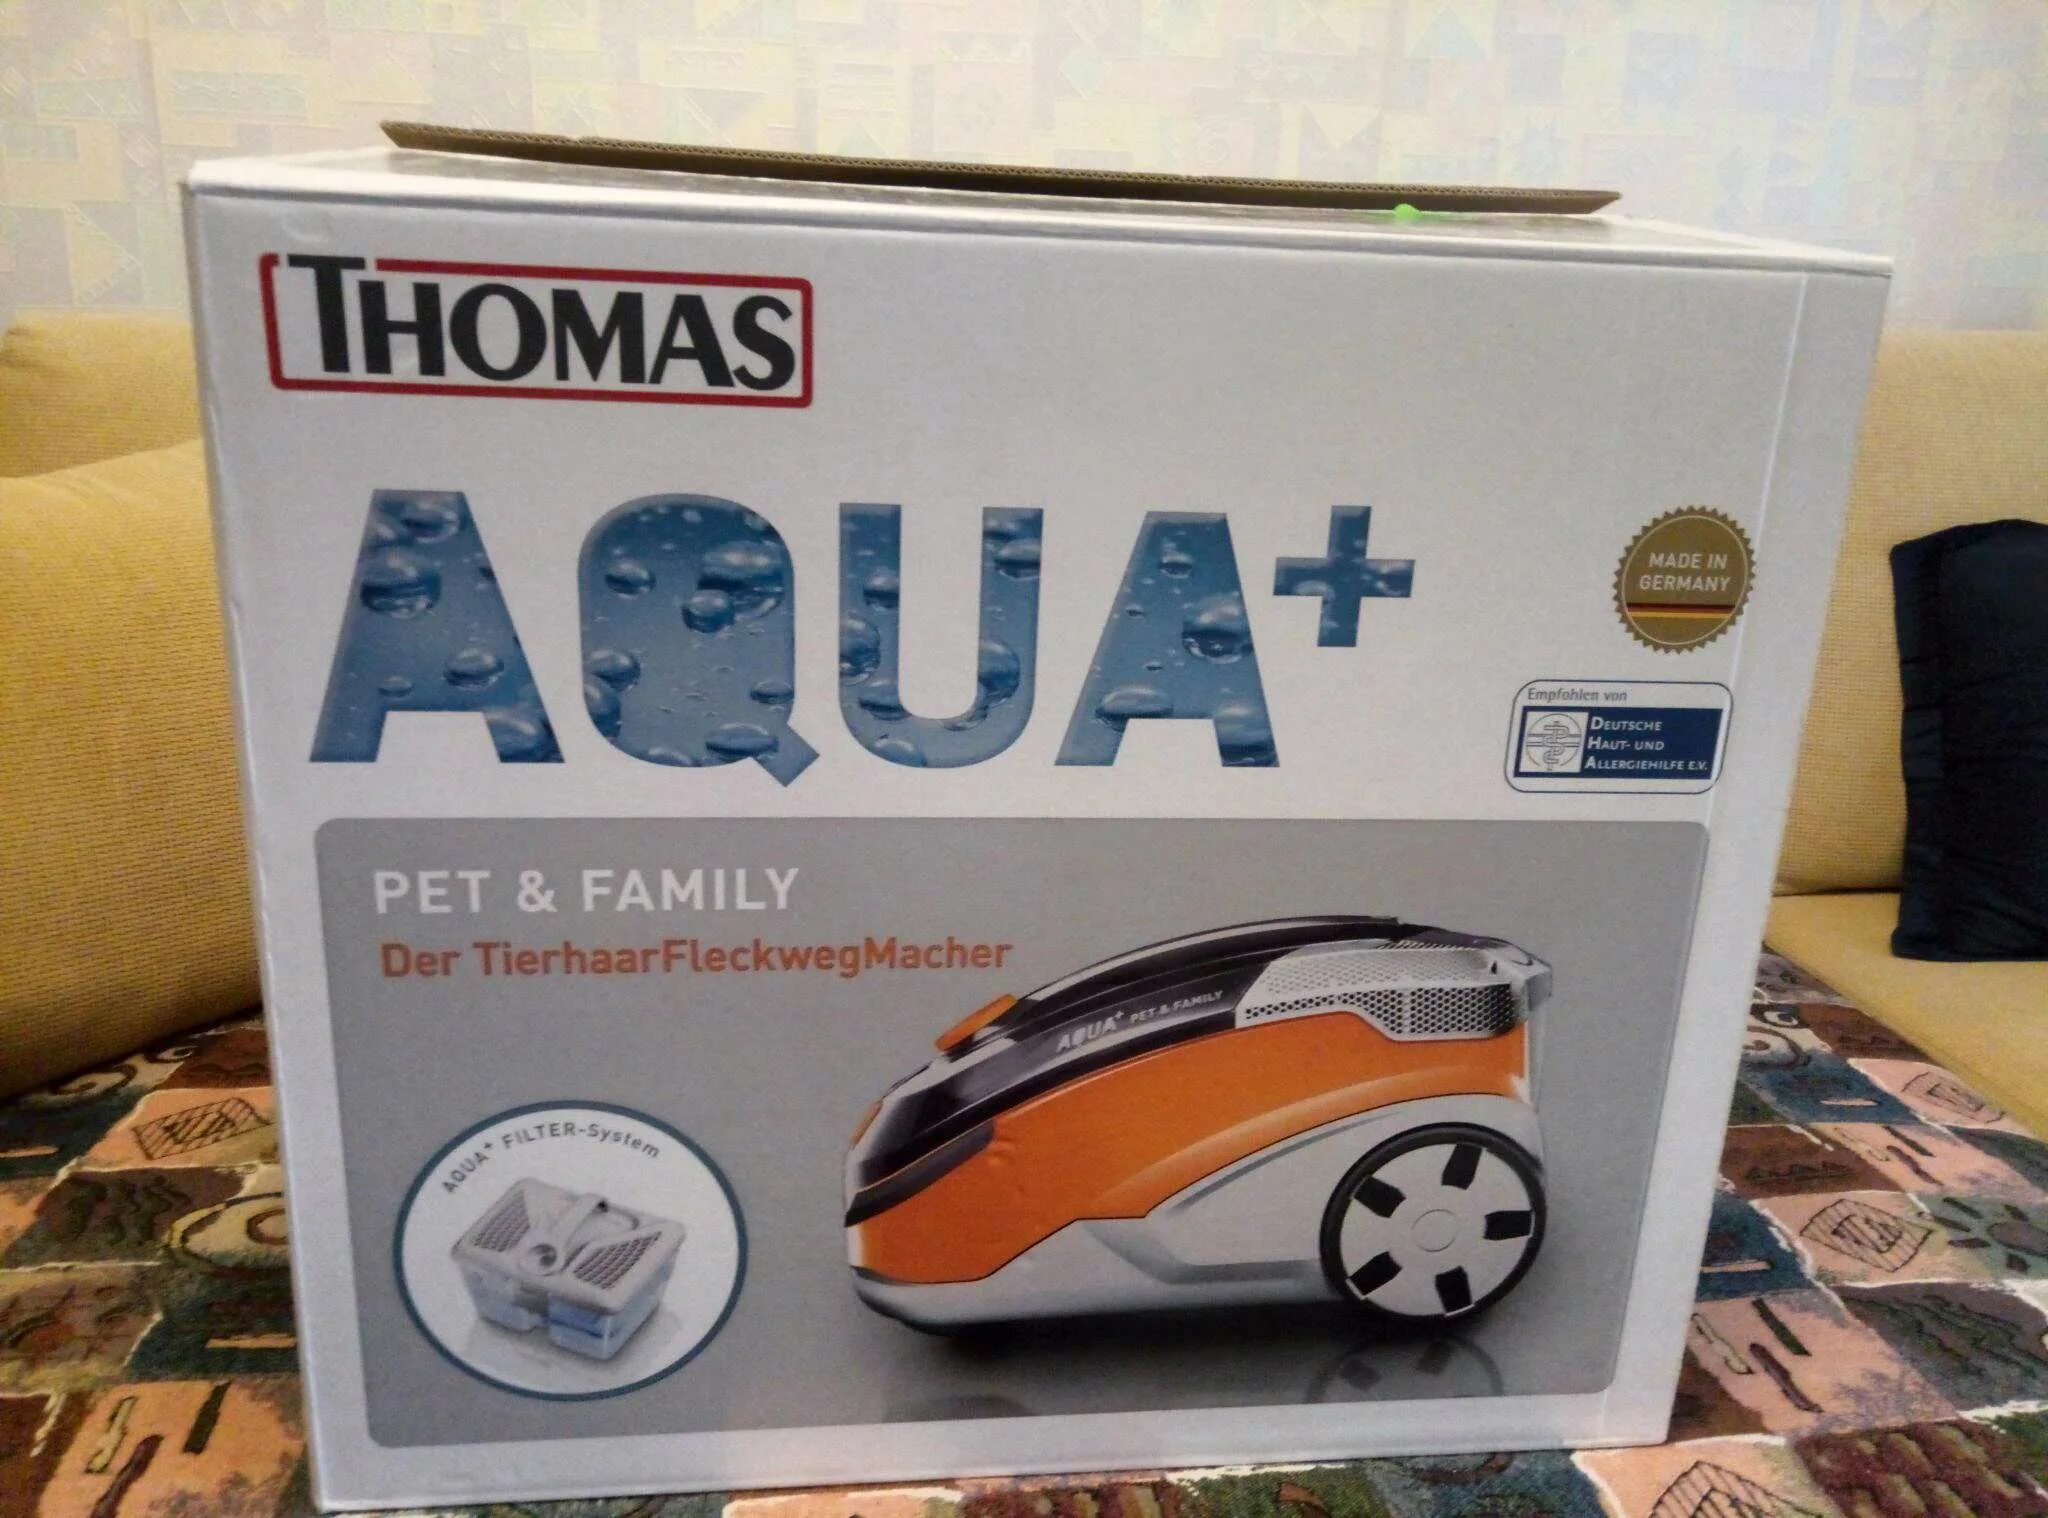 Pet family parquet pro. Моющий пылесос Thomas Pet & Family. Пылесос Thomas Aqua Pet&Family parquet Pro.